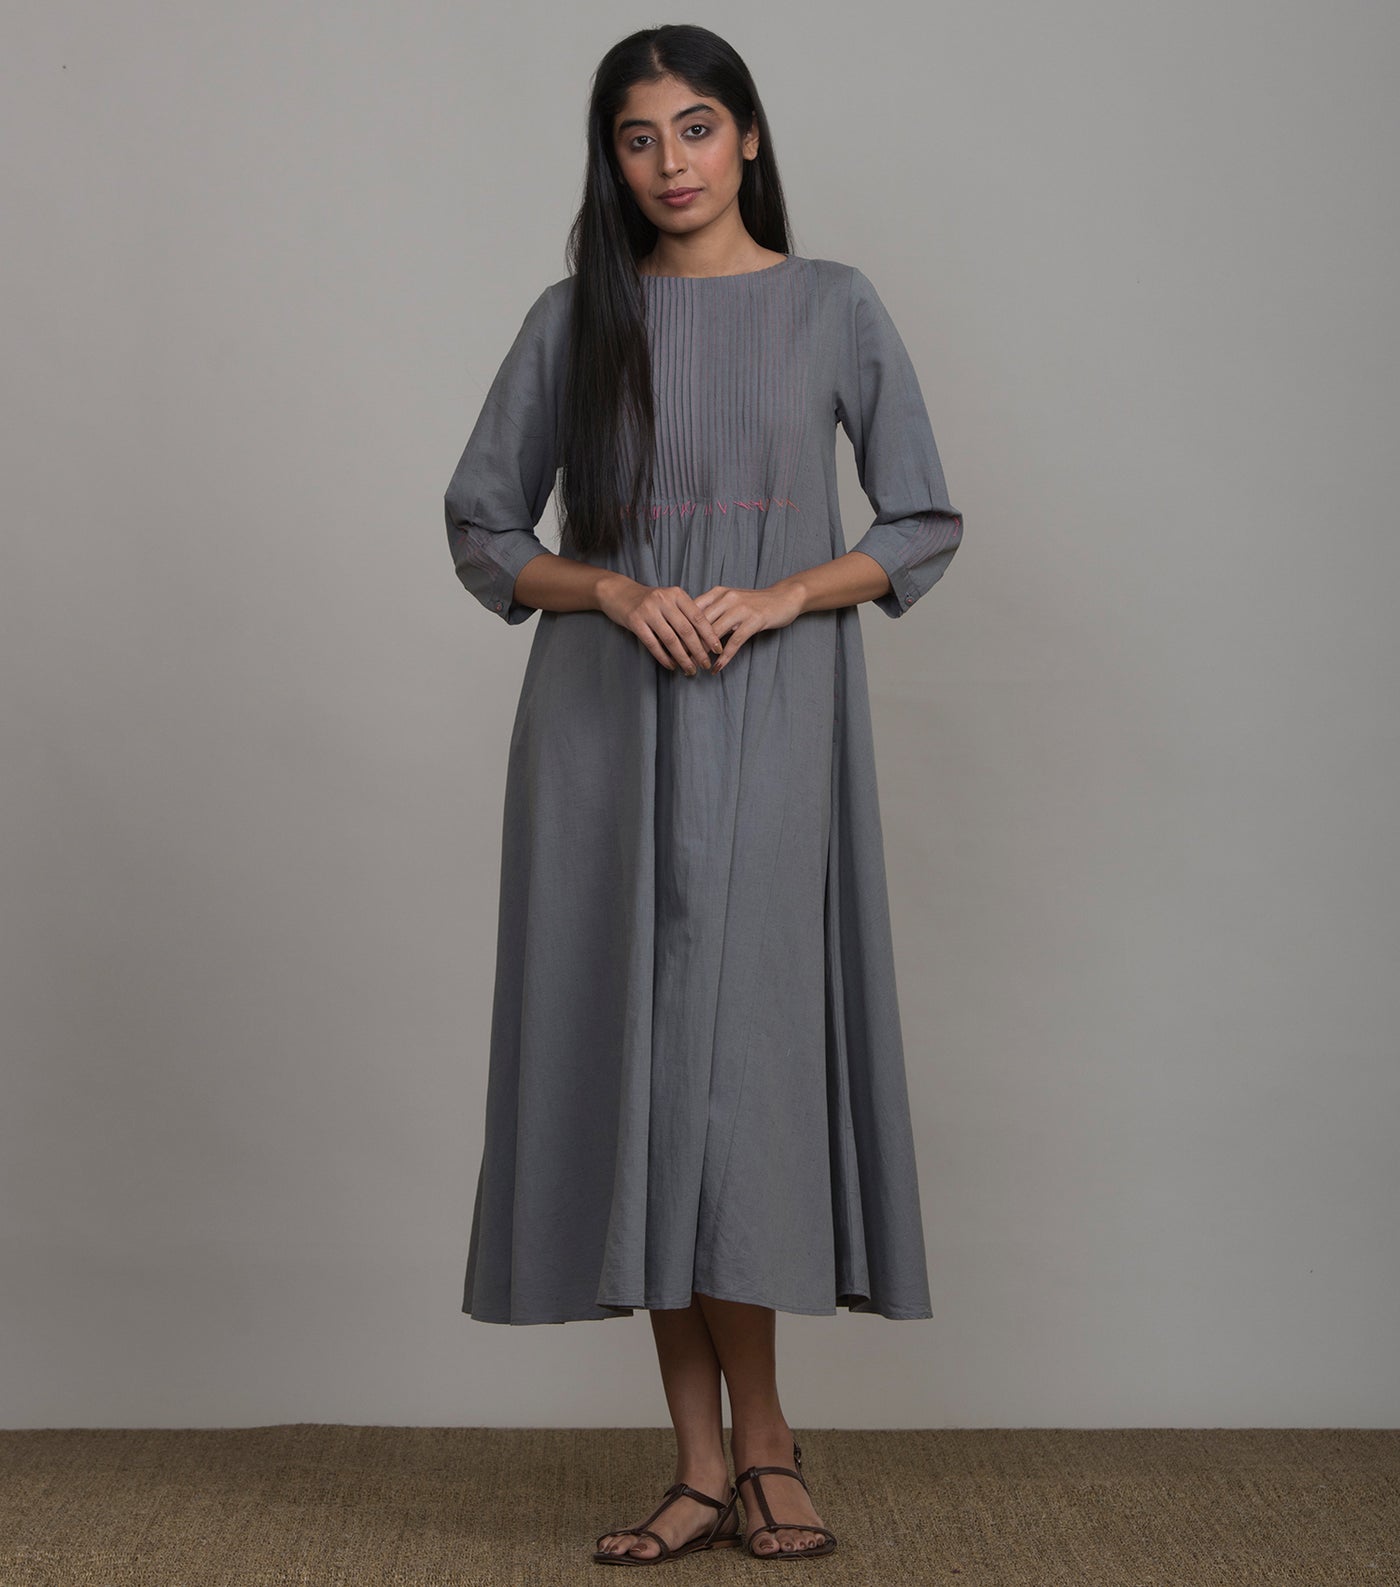 Dark grey cotton linen dress